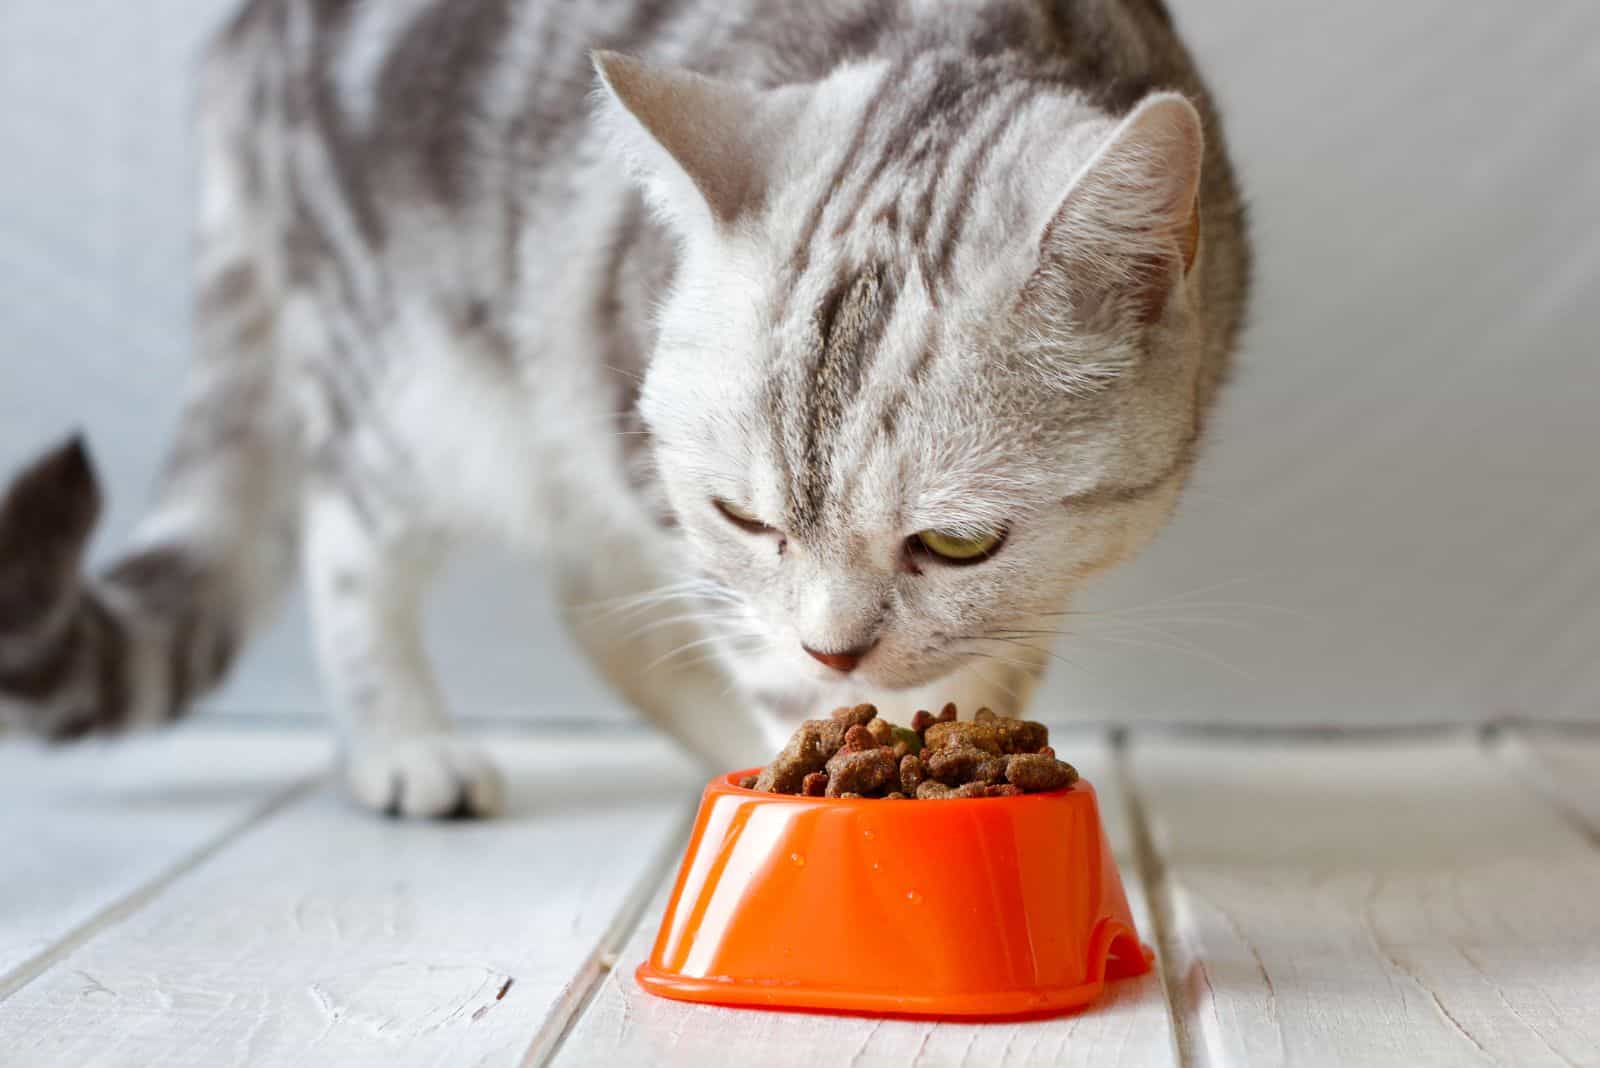 cat eating from orange food bowl